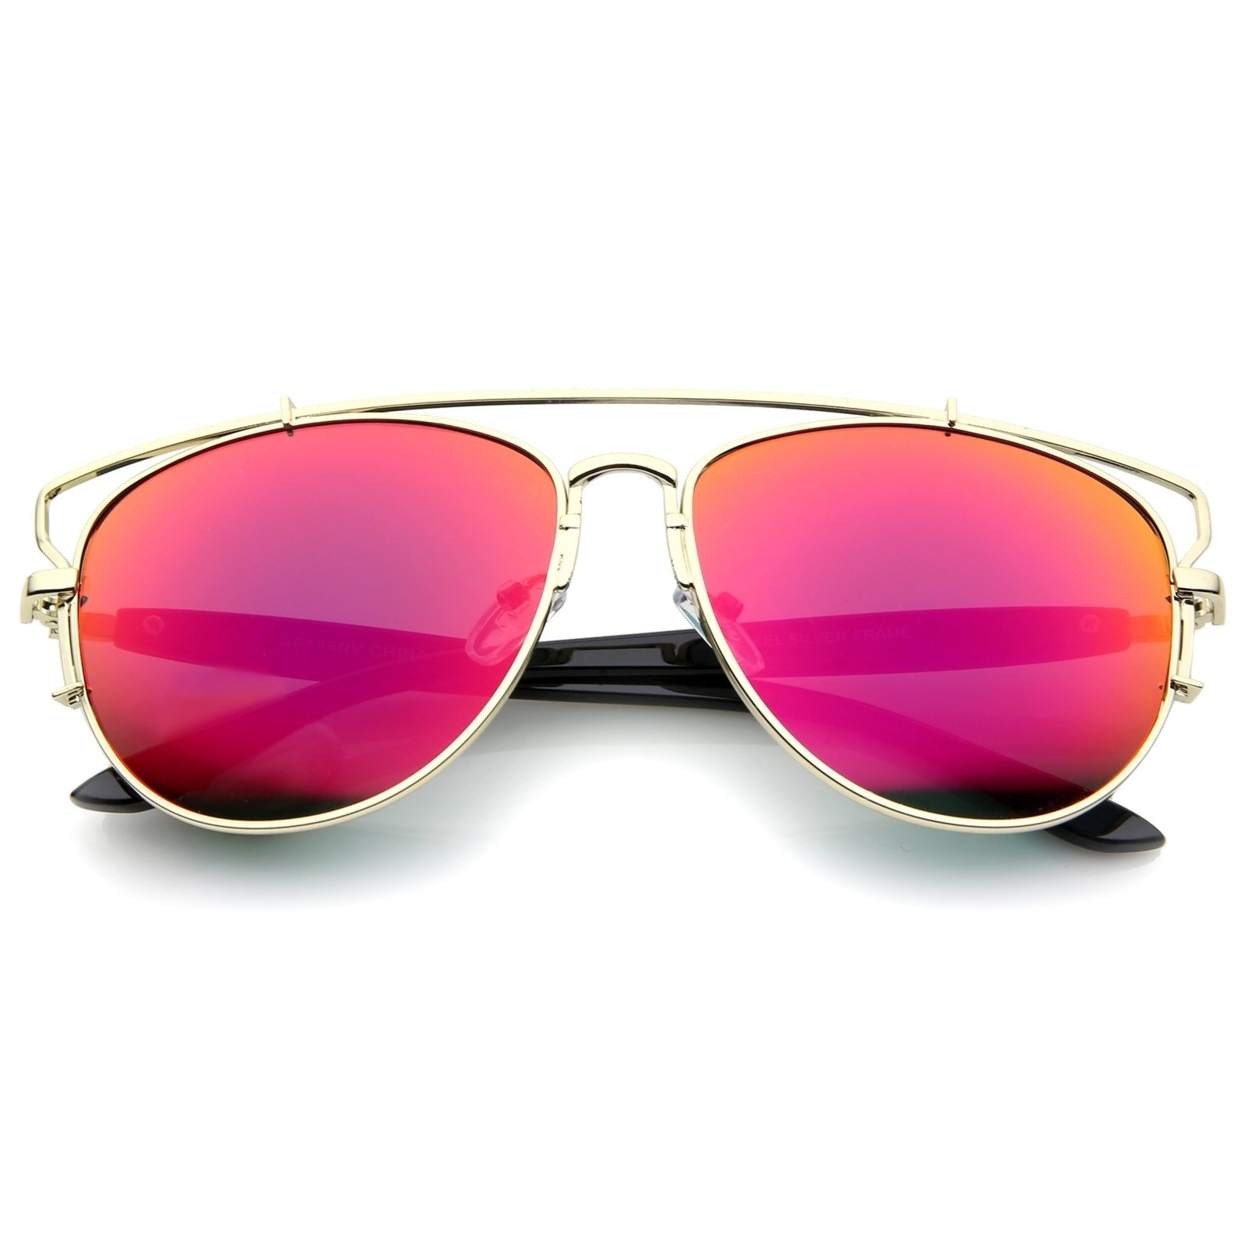 Modern Full Metal Crossbar Open Design Colored Mirror Aviator Sunglasses 58mm - Gold / Blue Mirror